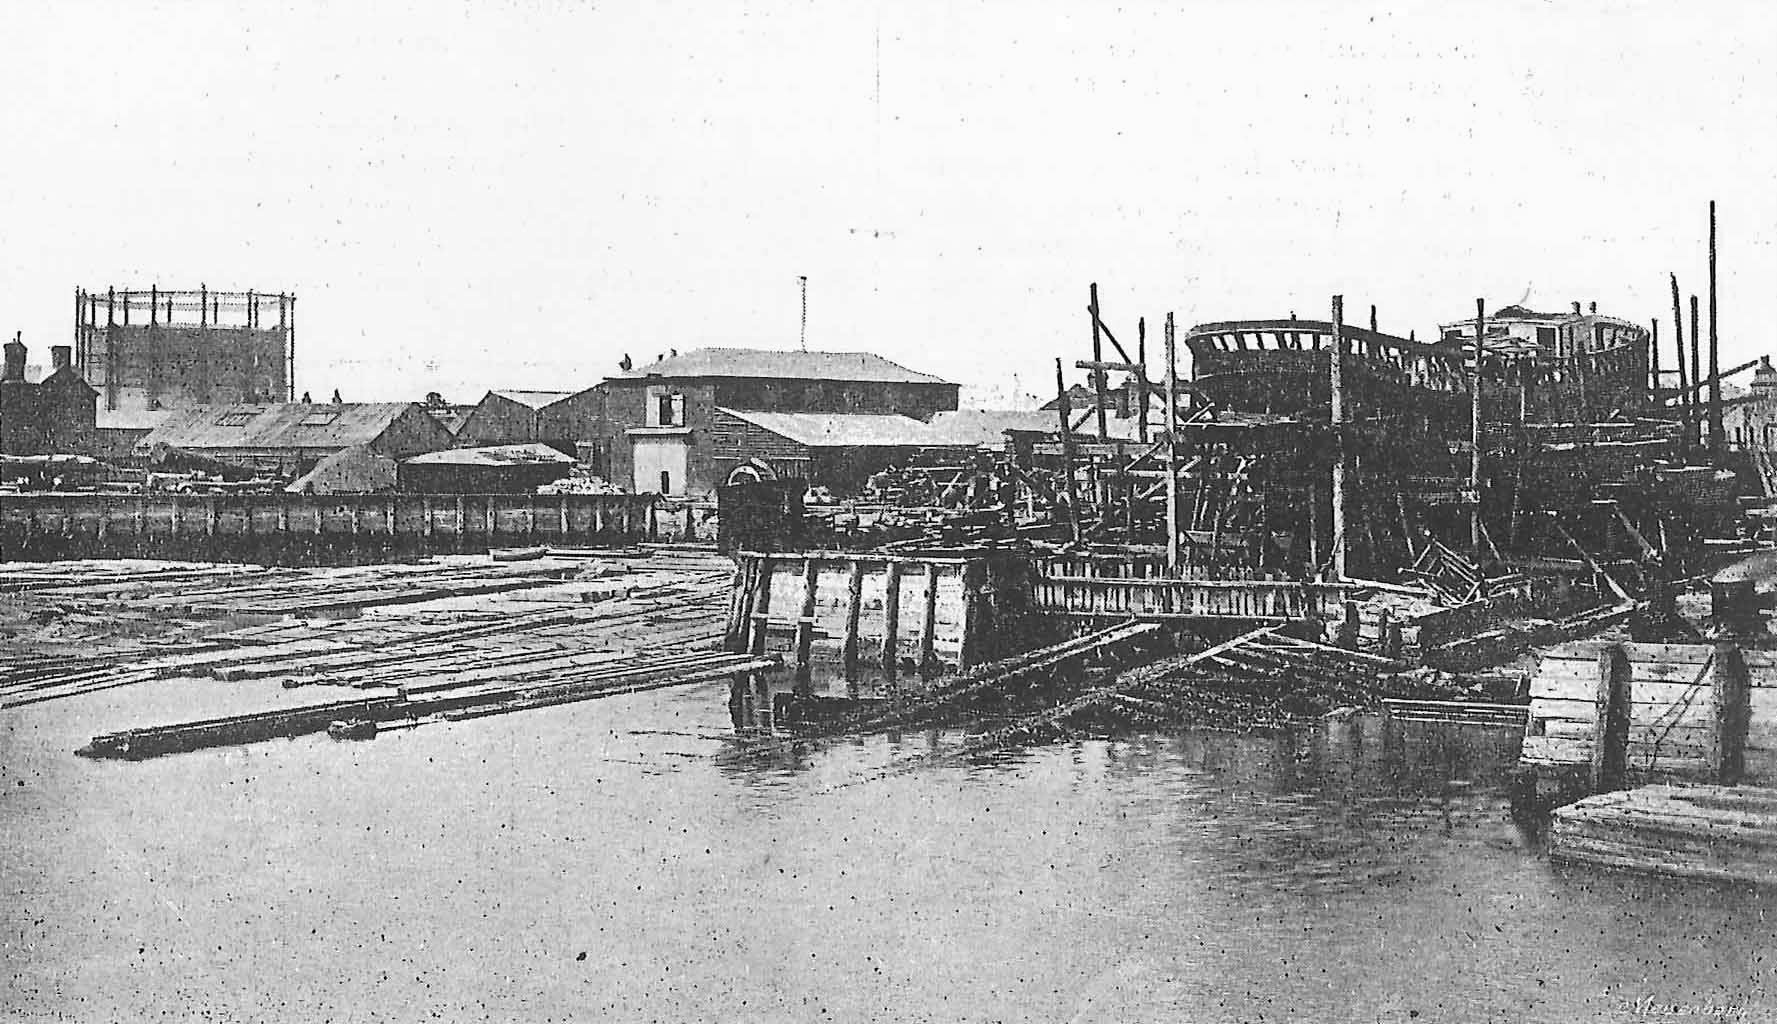 Belvidere shipyard - pictured in 1900.